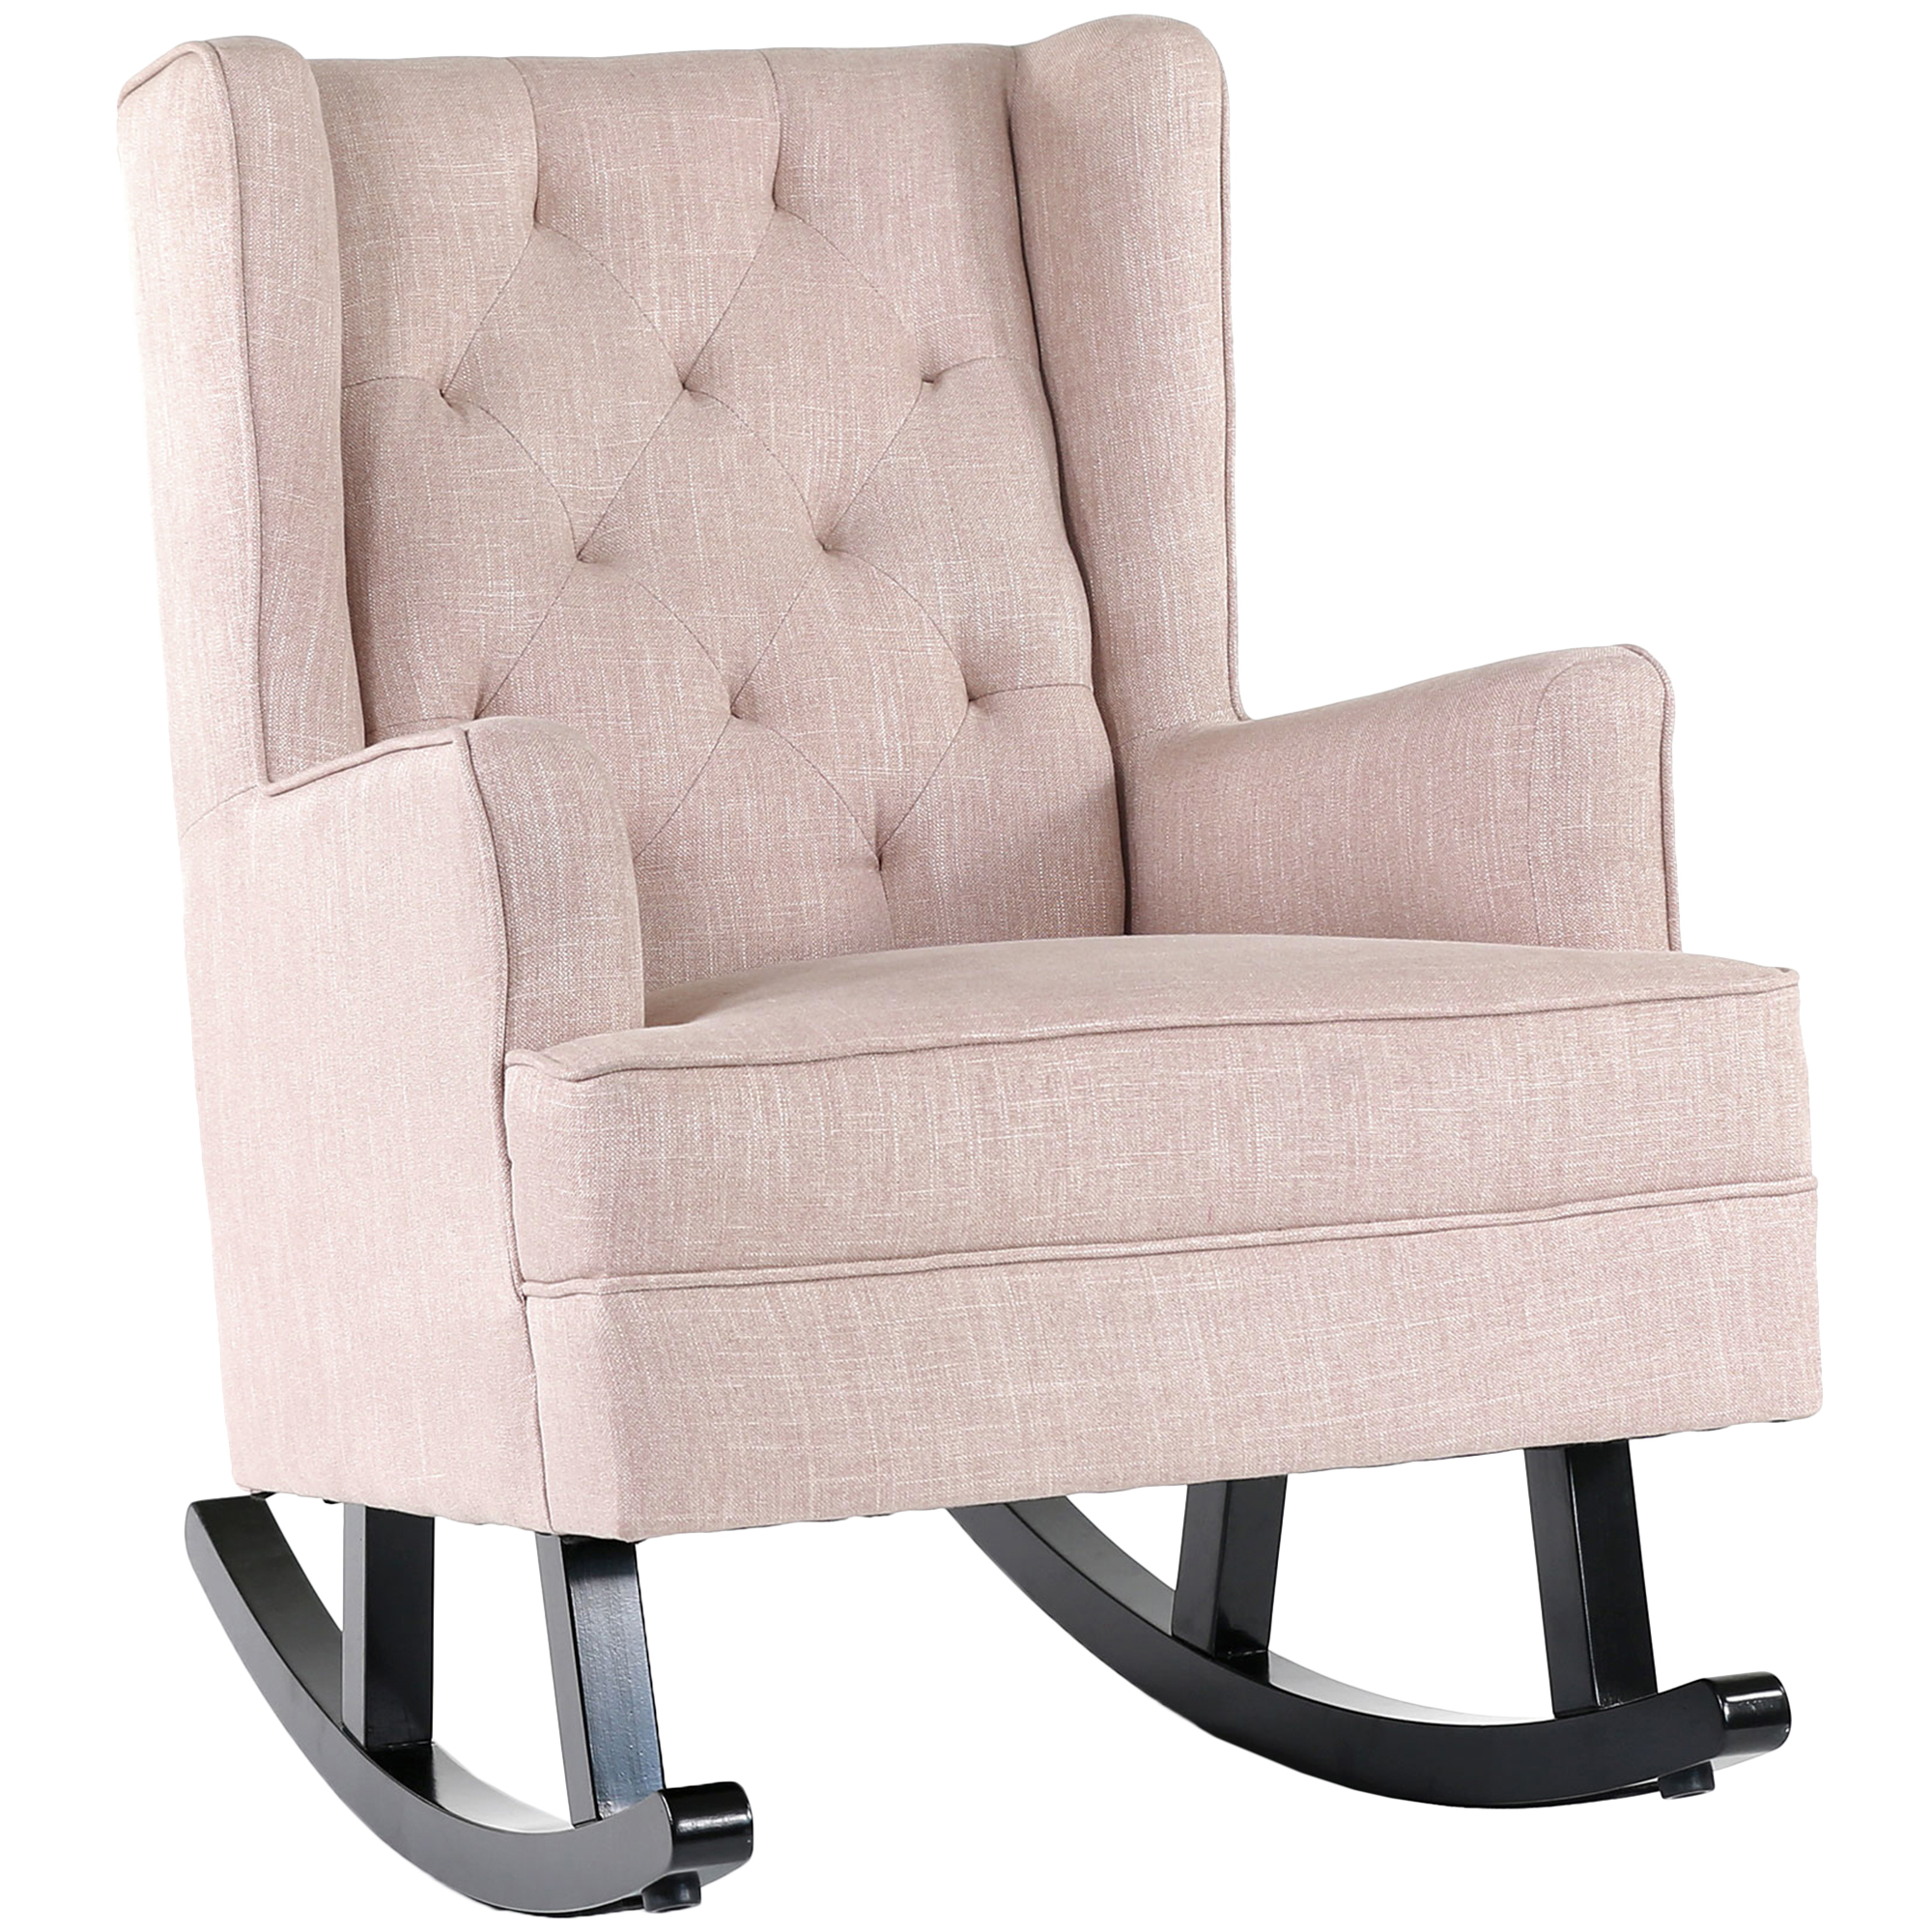 Hyde Park Home Dusty Pink Isla Wingback, Pink White Rocker Chair